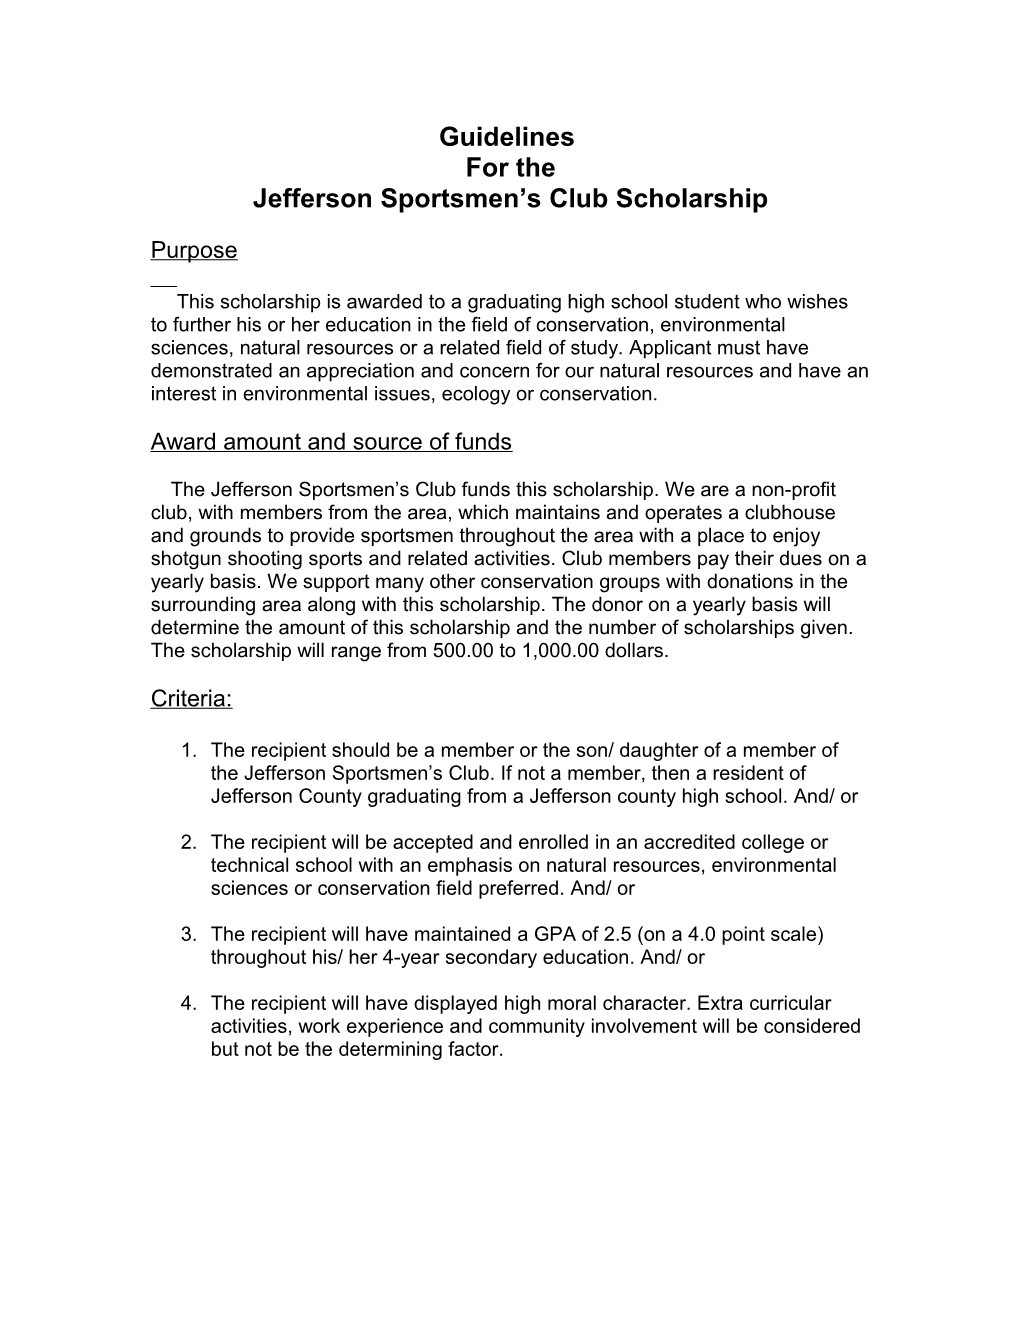 Jefferson Sportsmen S Club Scholarship